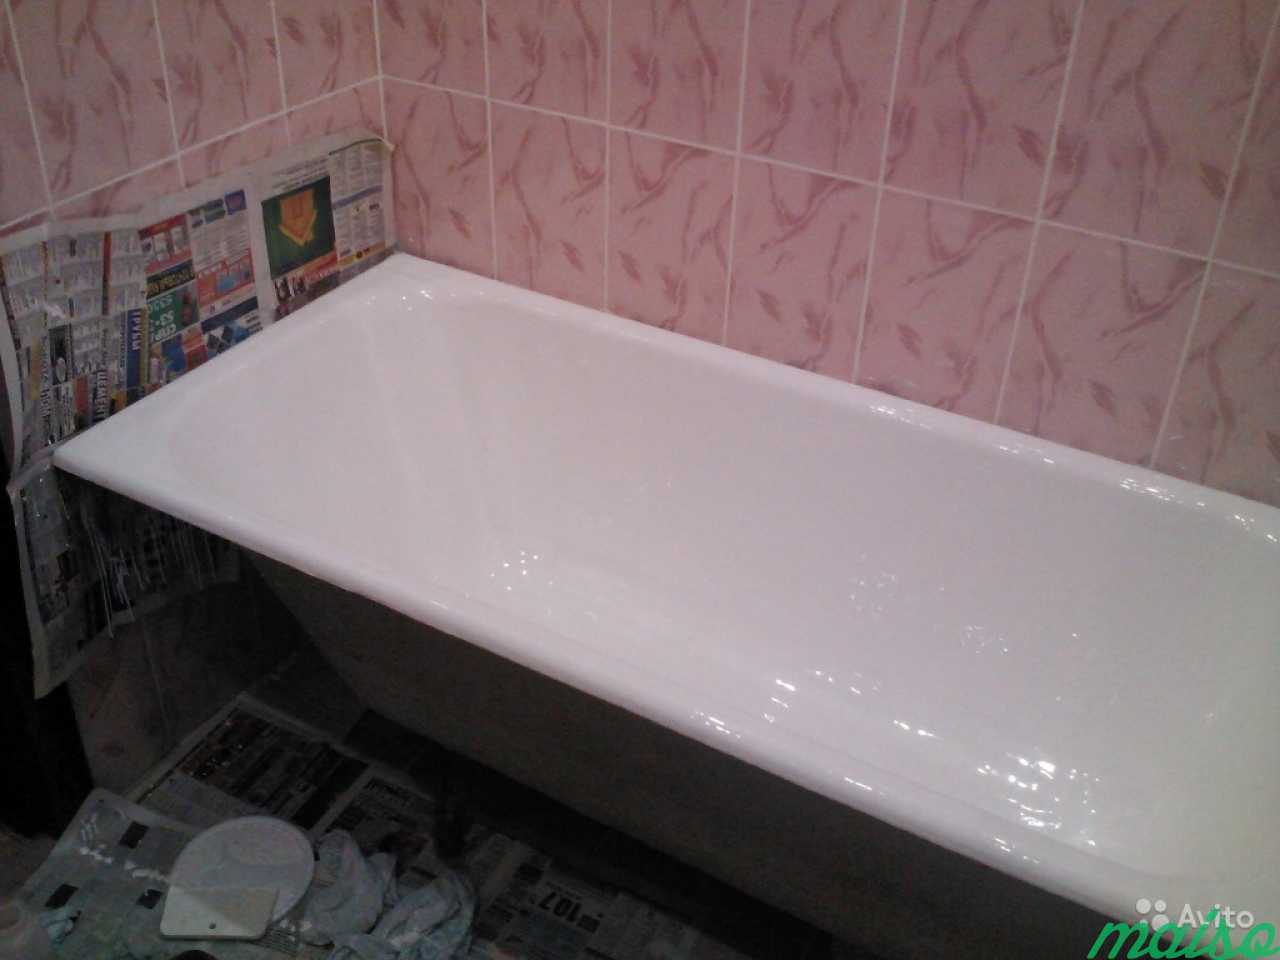 Реставрация ванн с гарантией качества работ в Санкт-Петербурге. Фото 2